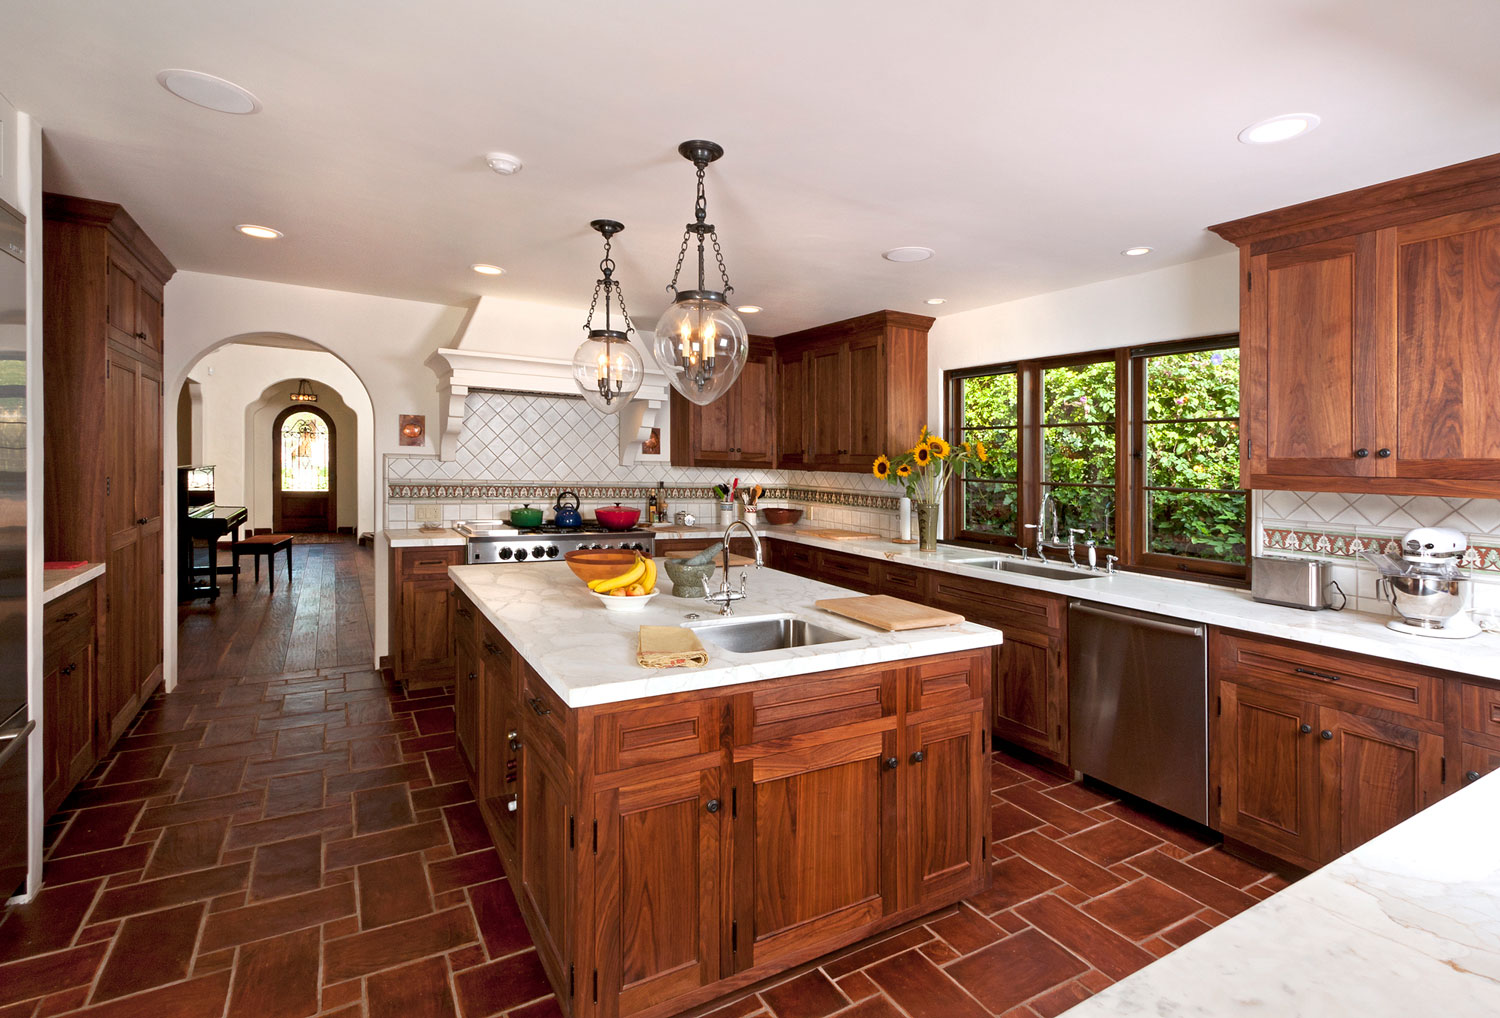 07-spanish-style-kitchen-tile-floor-marble-countertops-tile-backsplash-gary-drake-general-contractor.jpg